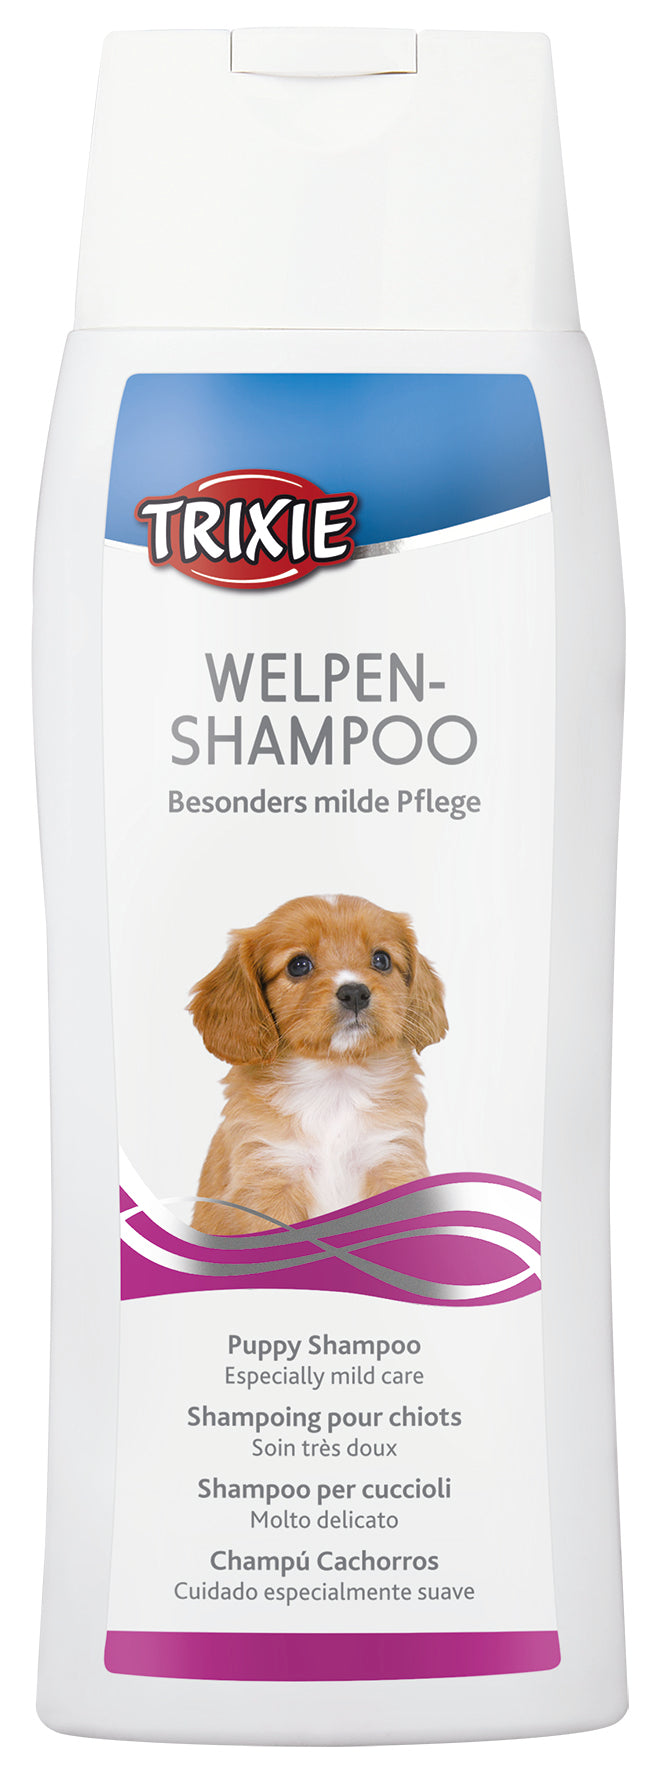 Puppy Shampoo - PetsCura